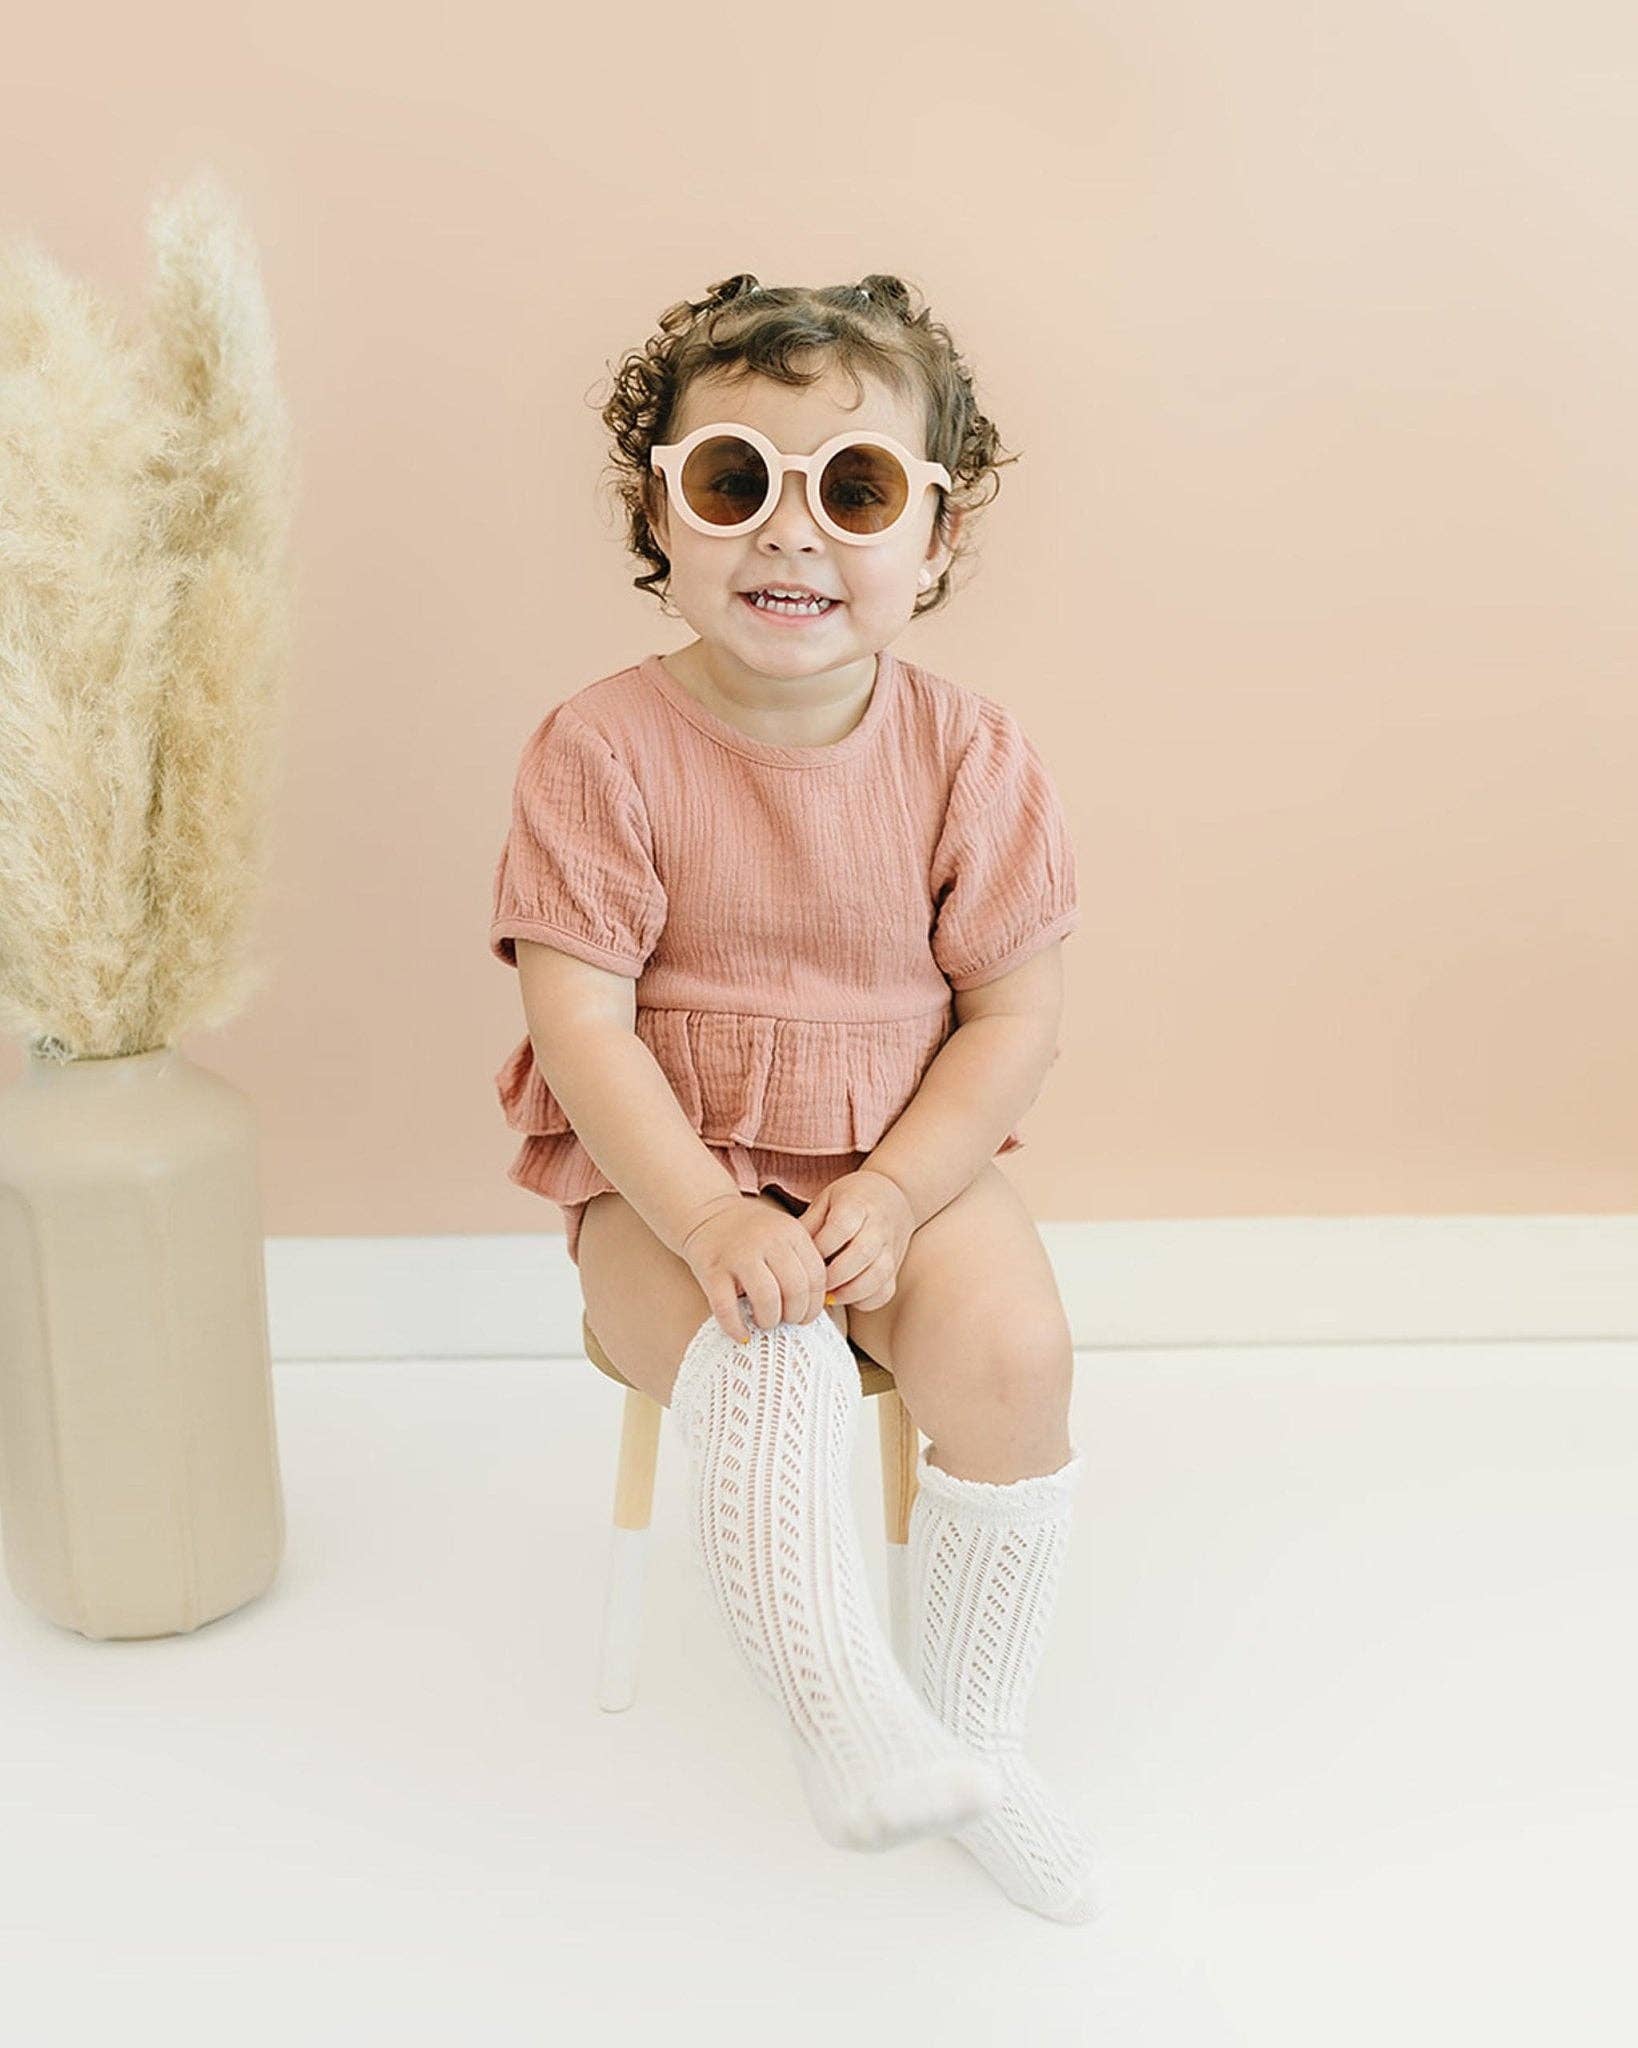 Ruffle Top Knee High Socks Tea for Three: A Children's Boutique